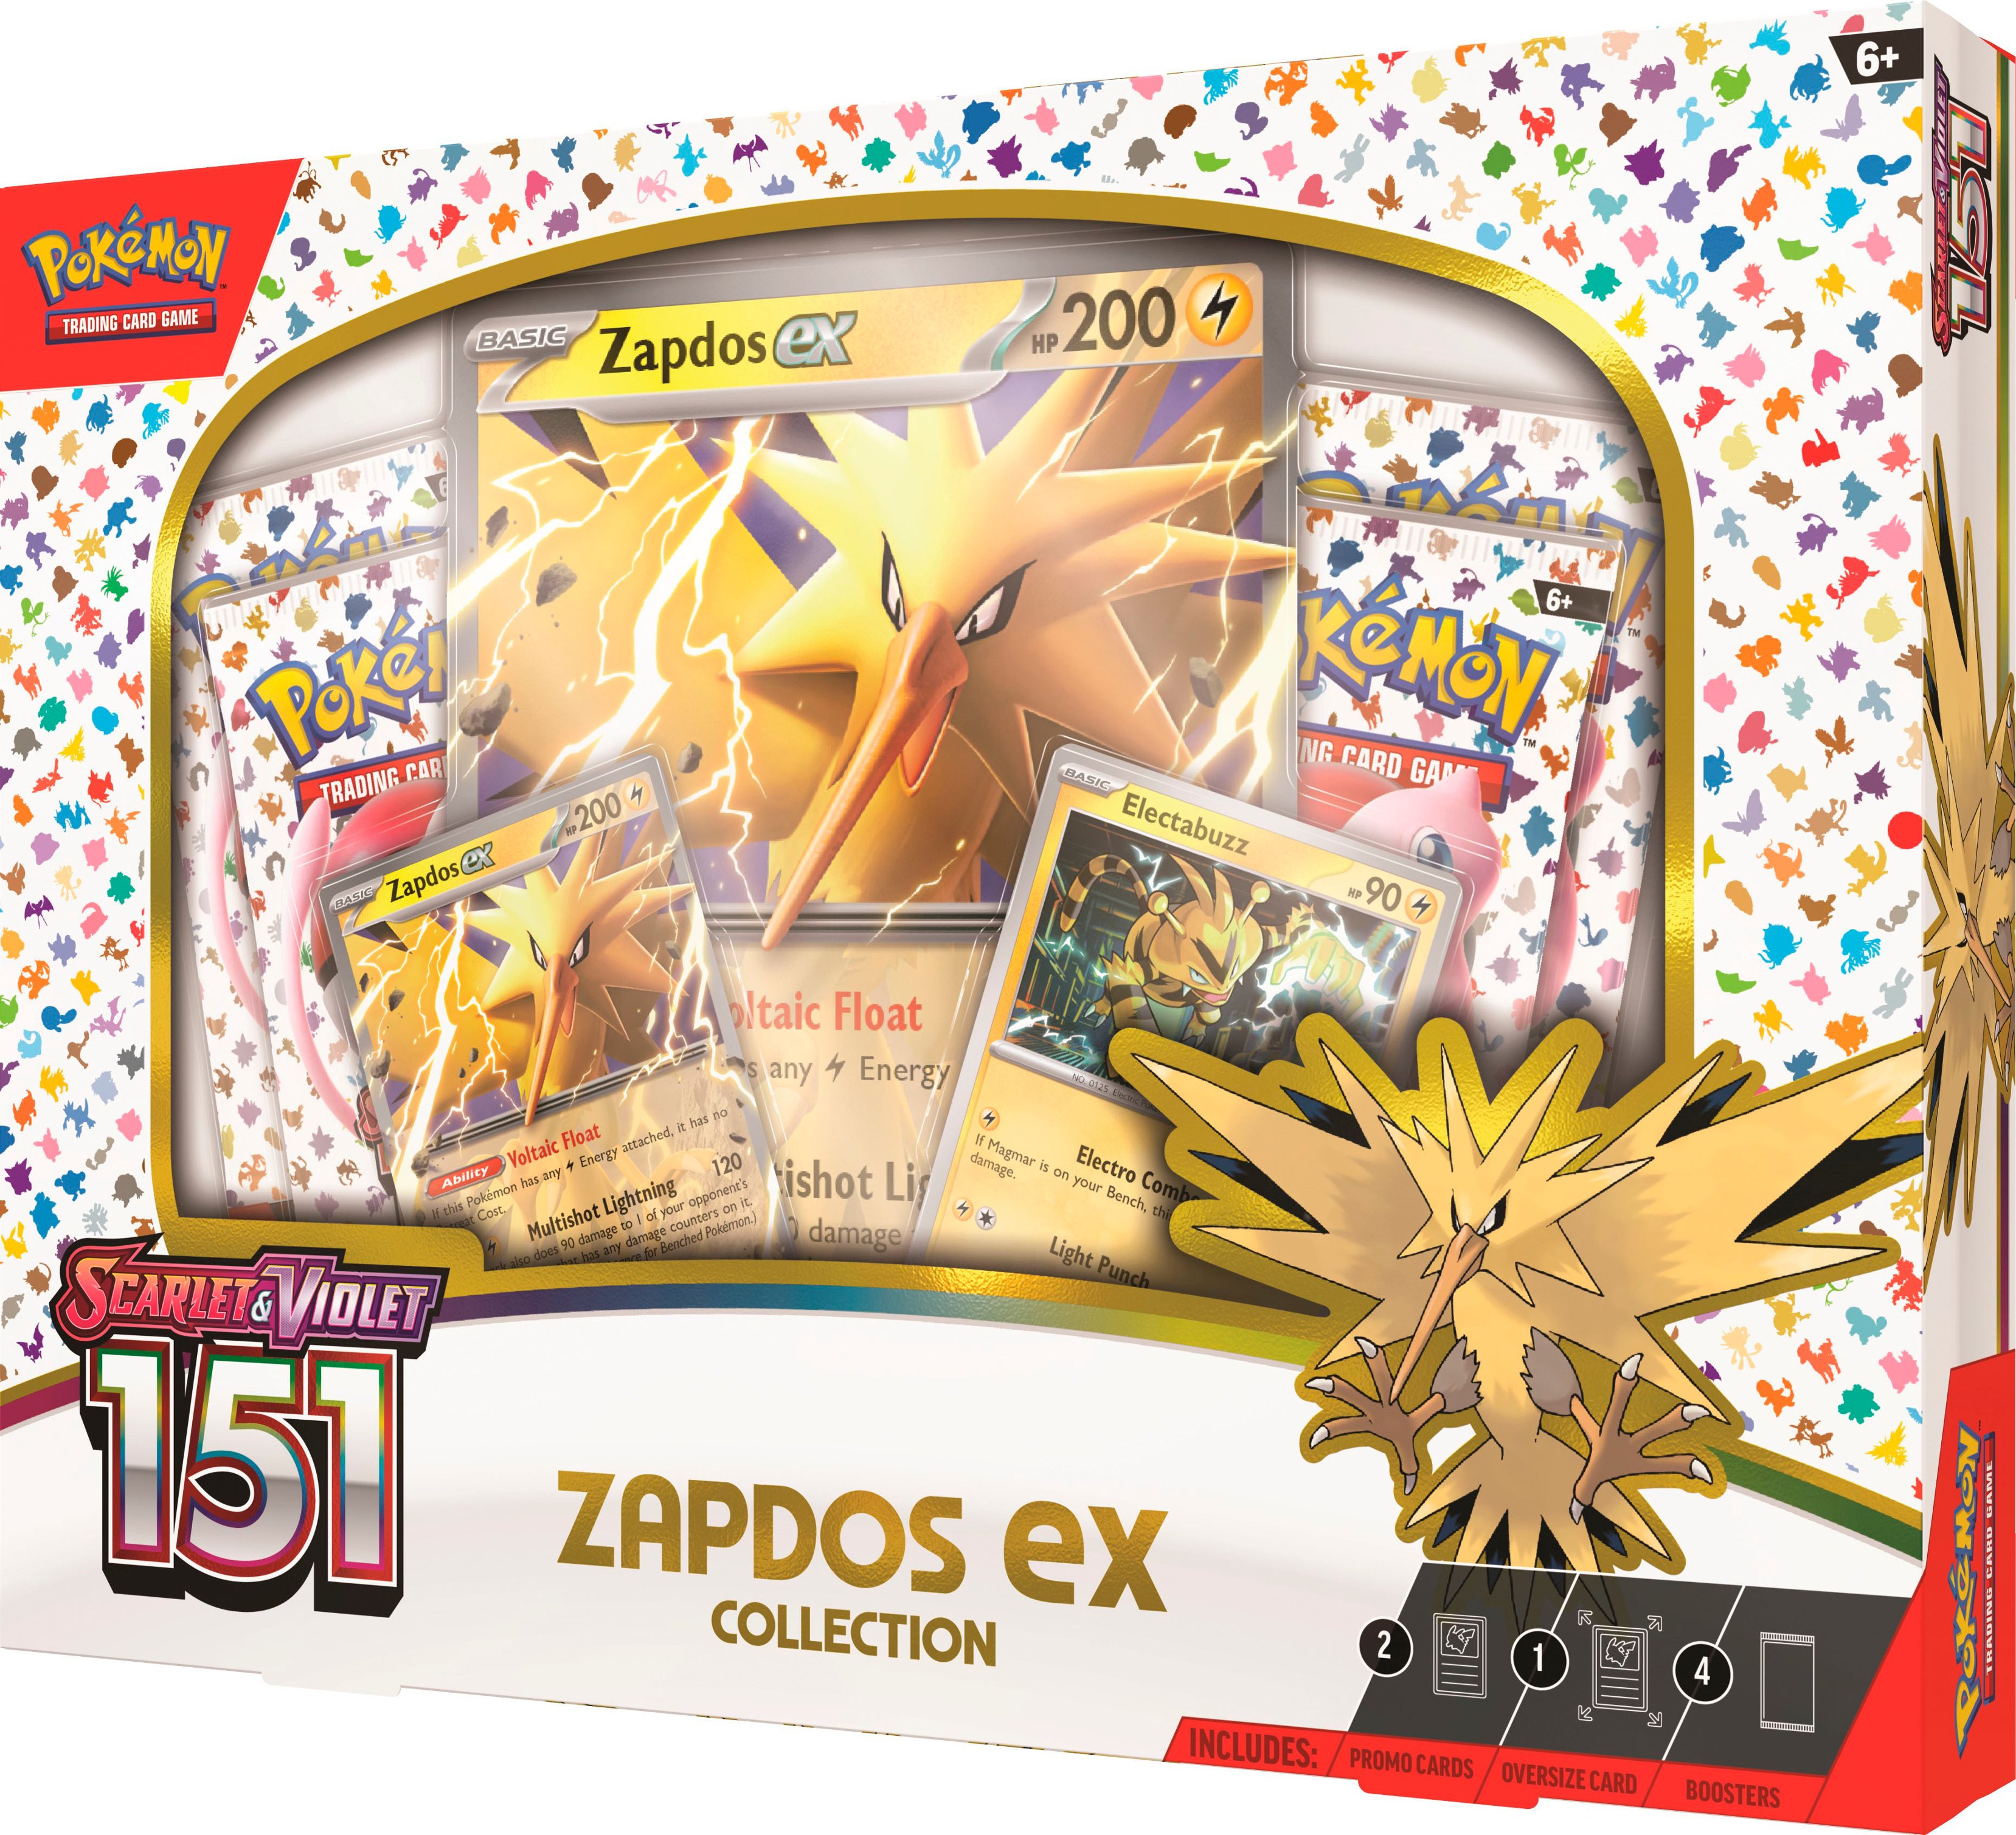 Pokémon Trading Card Game: 151 Zapdos ex Box 290-87313 - Best Buy